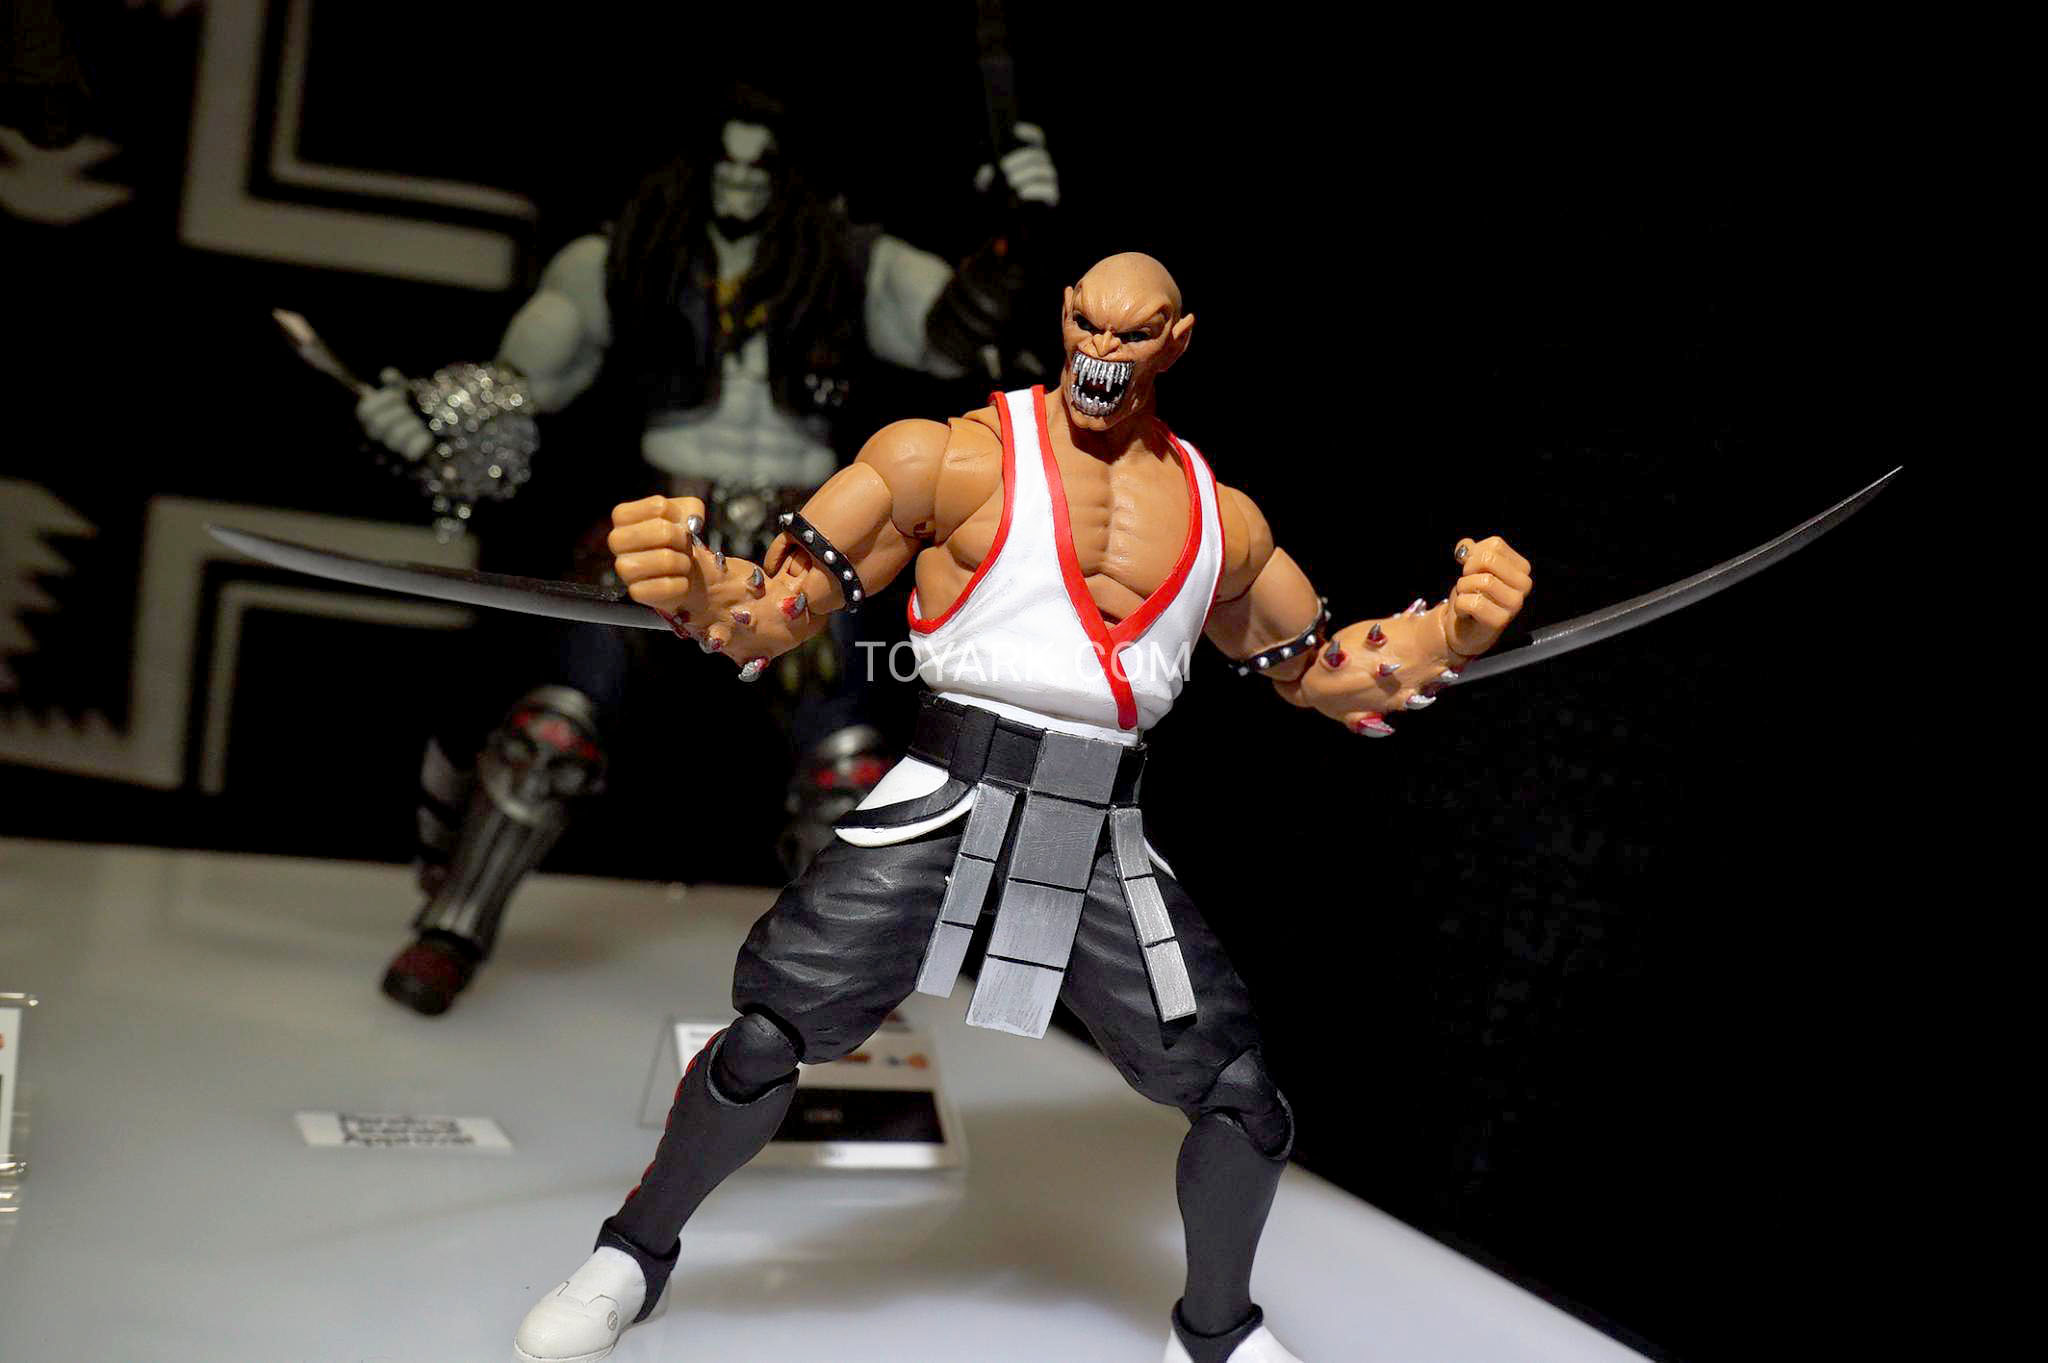 Storm Collectibles Mortal Kombat Kano - The Toyark - News